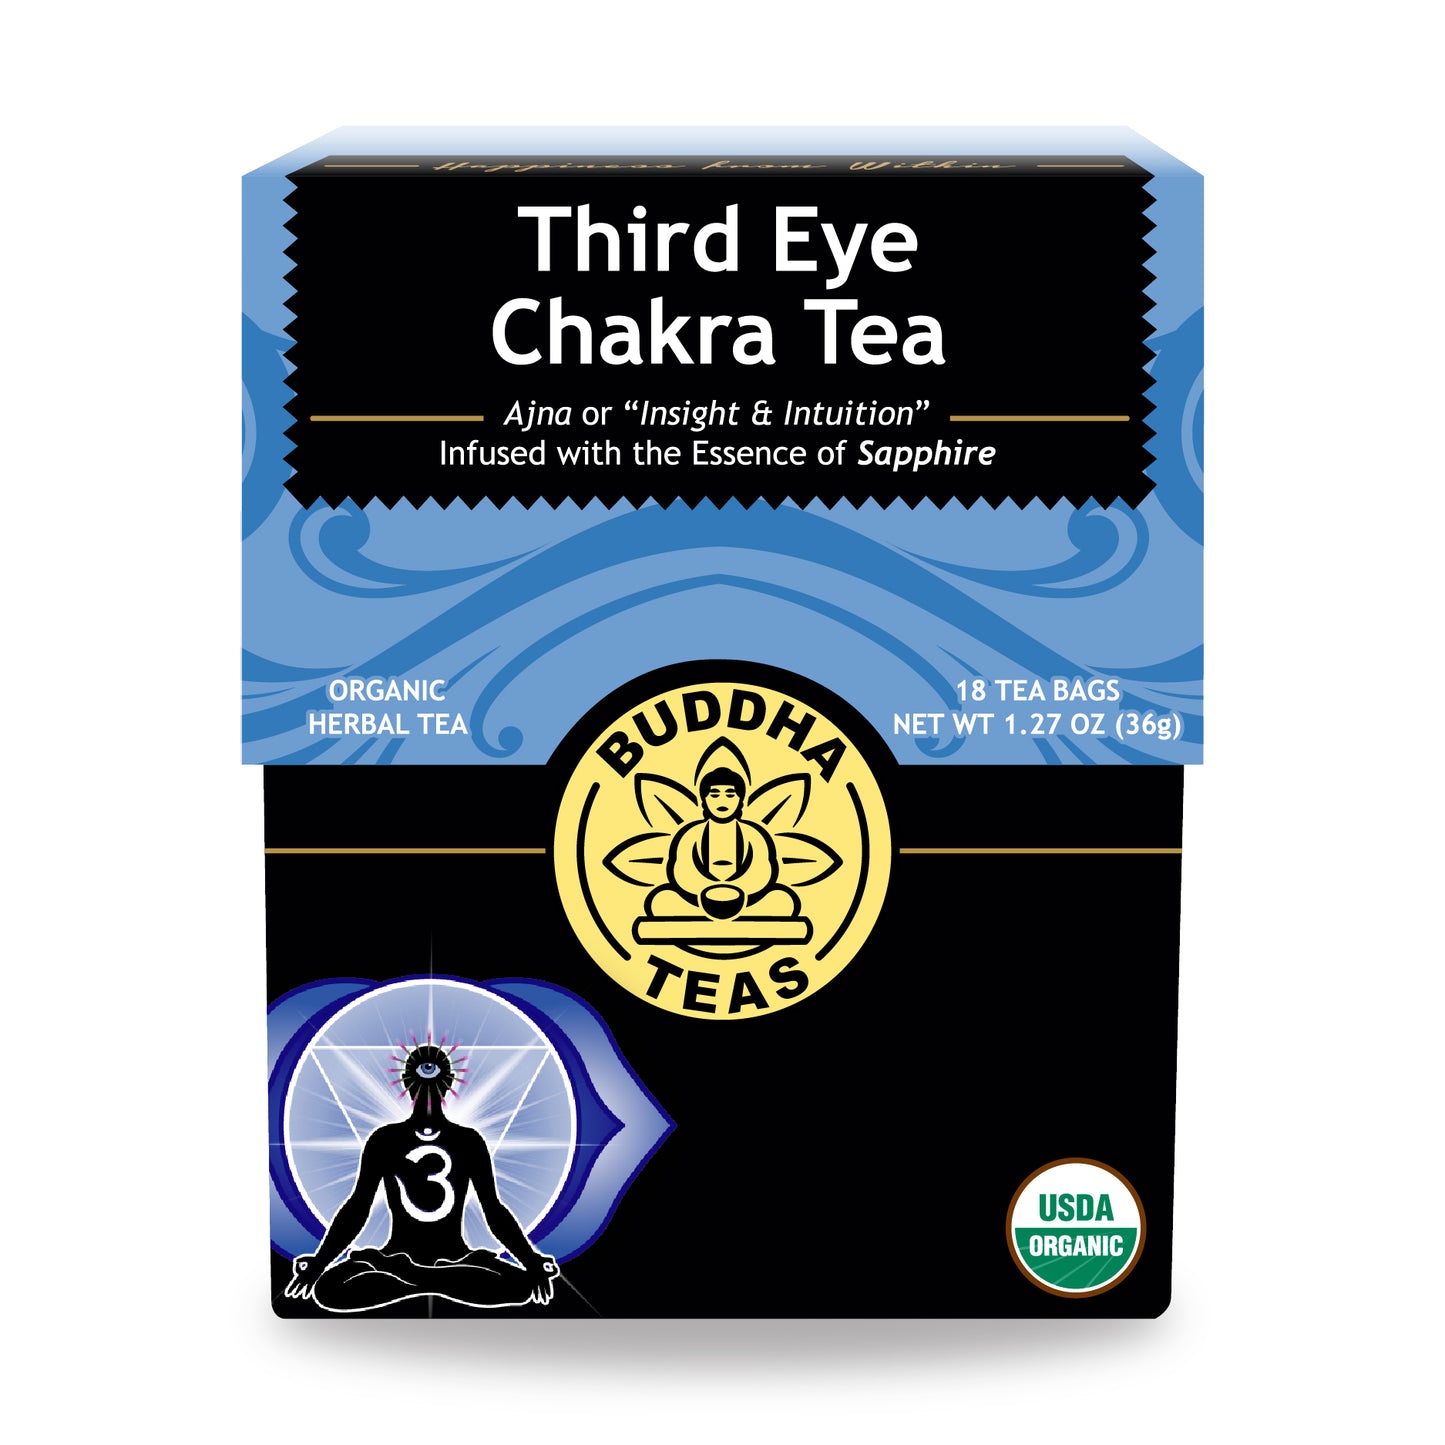 Third Eye Chakra Tea